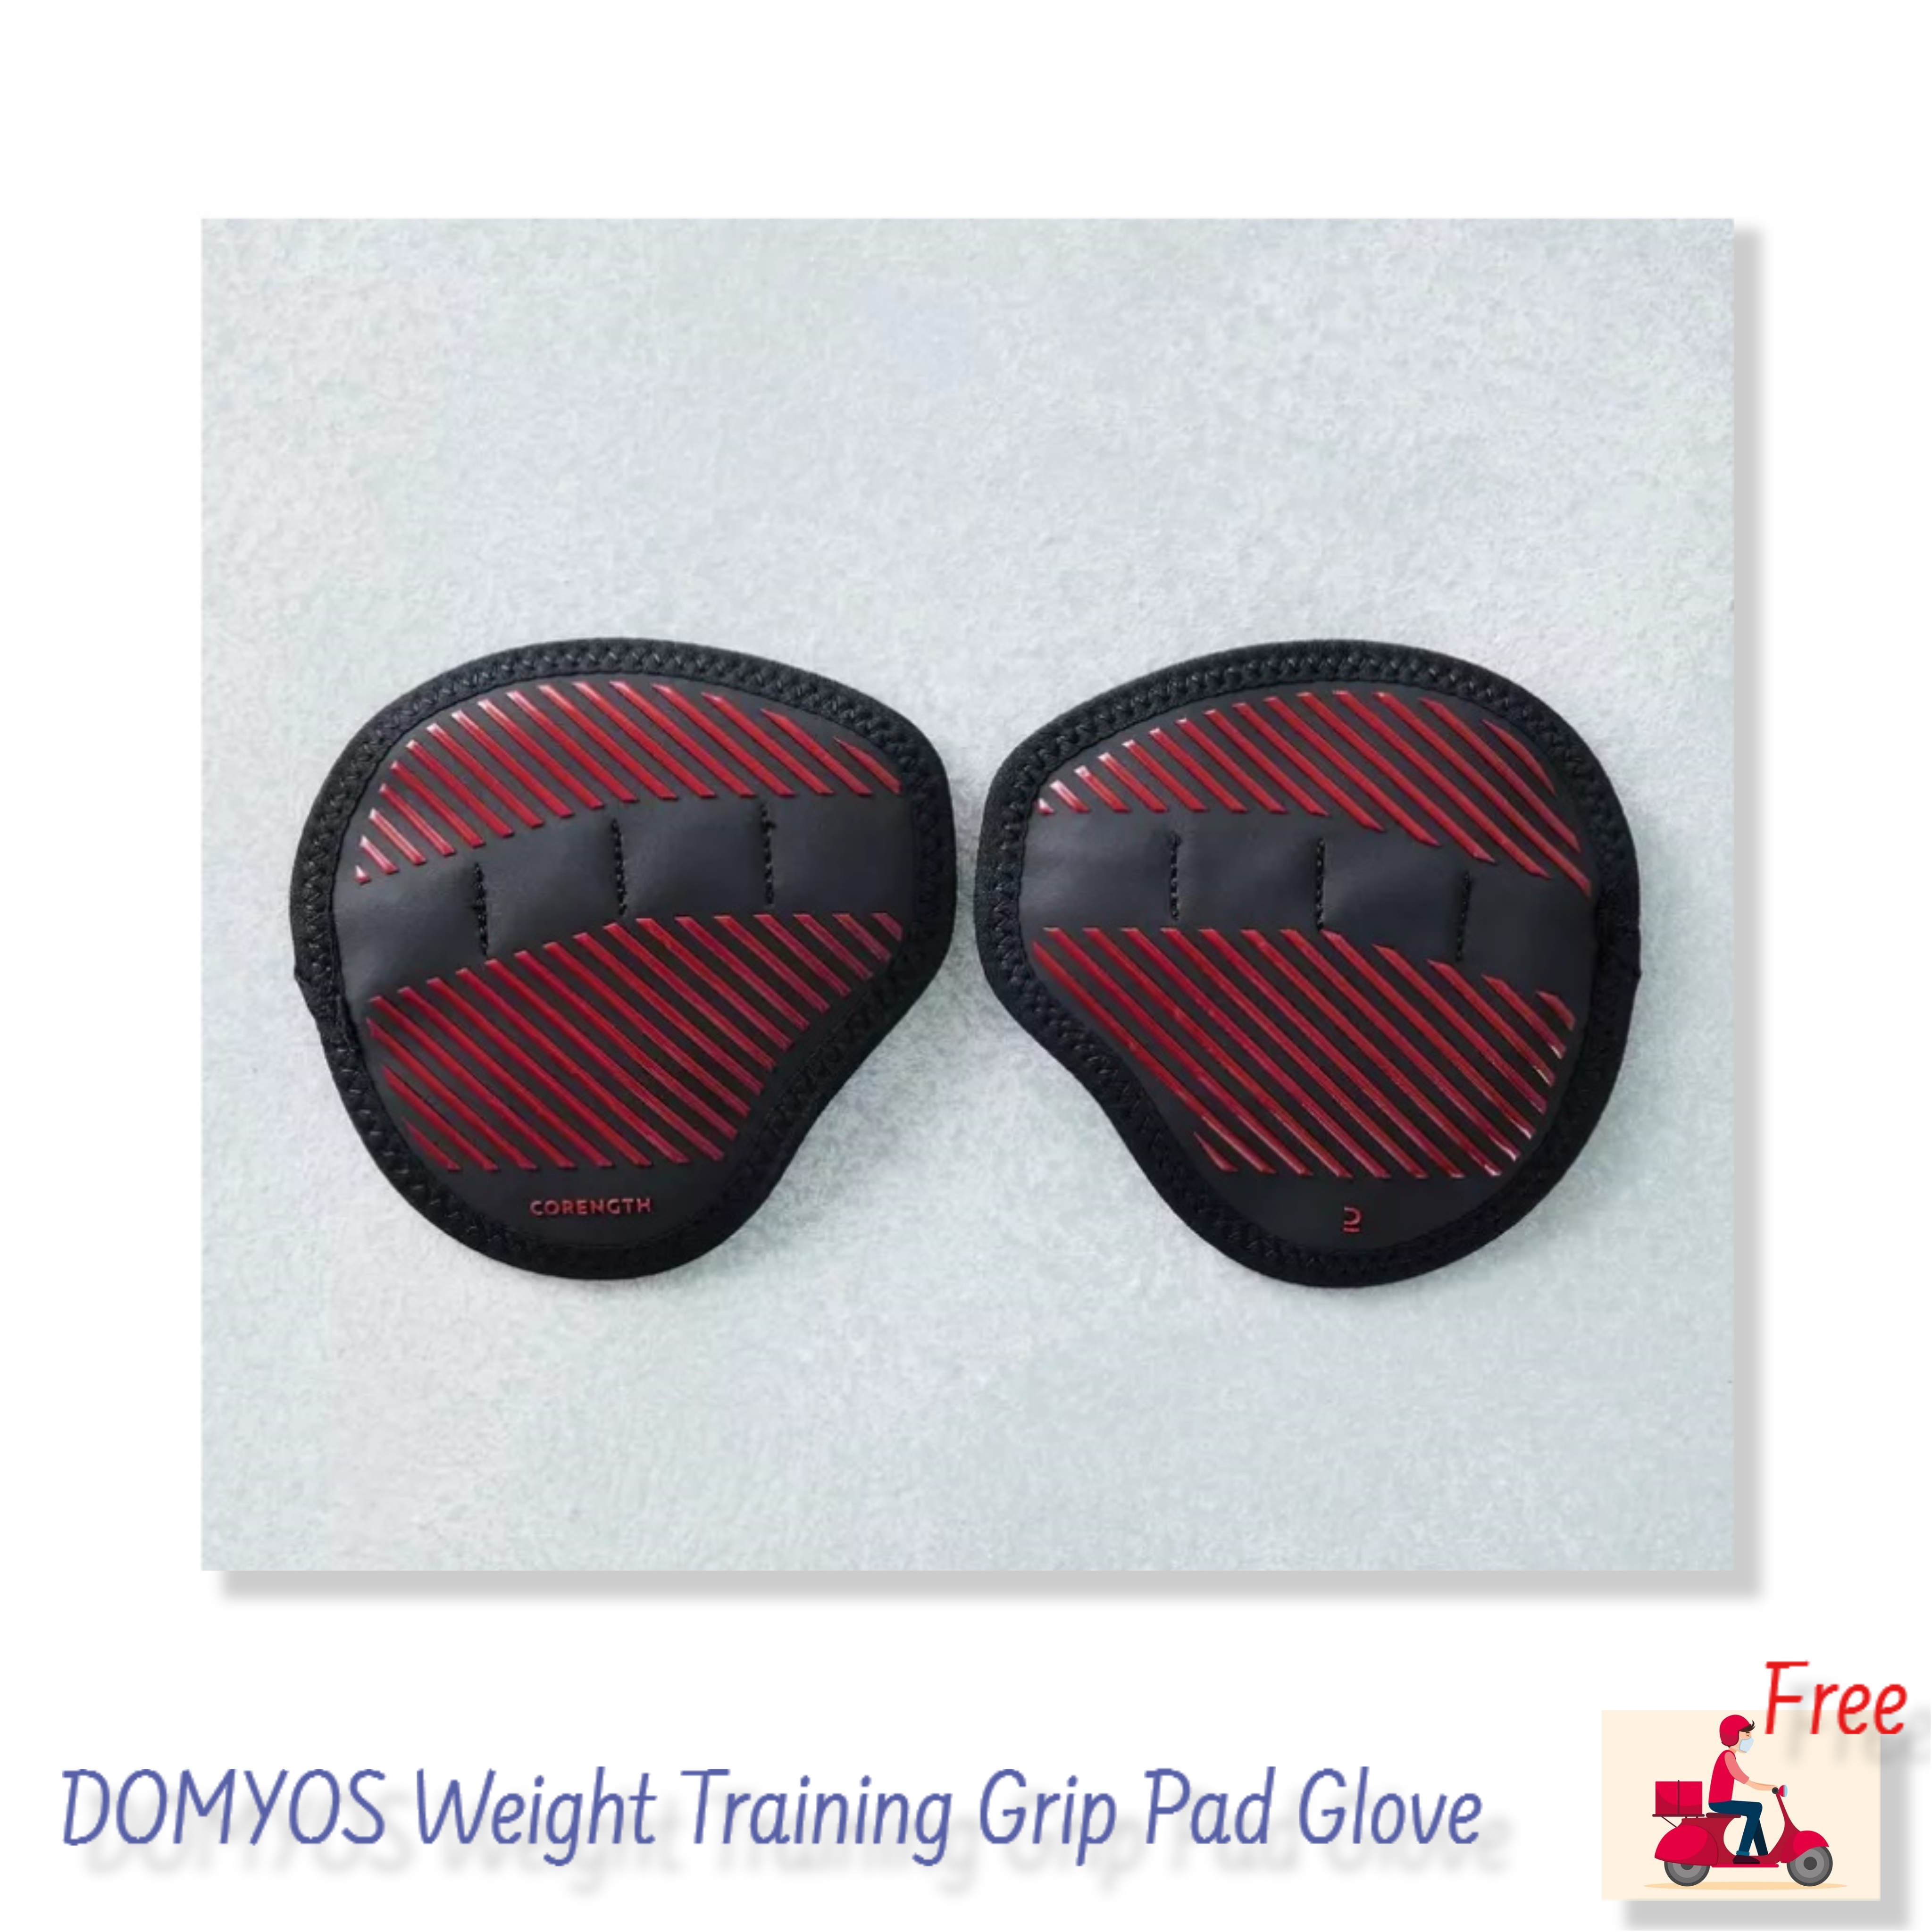 Weight Training Grip Pad Glove แผ่นรองฝ่ามือ แบบกริปสำหรับการฝึก เวทเทรนนิ่ง